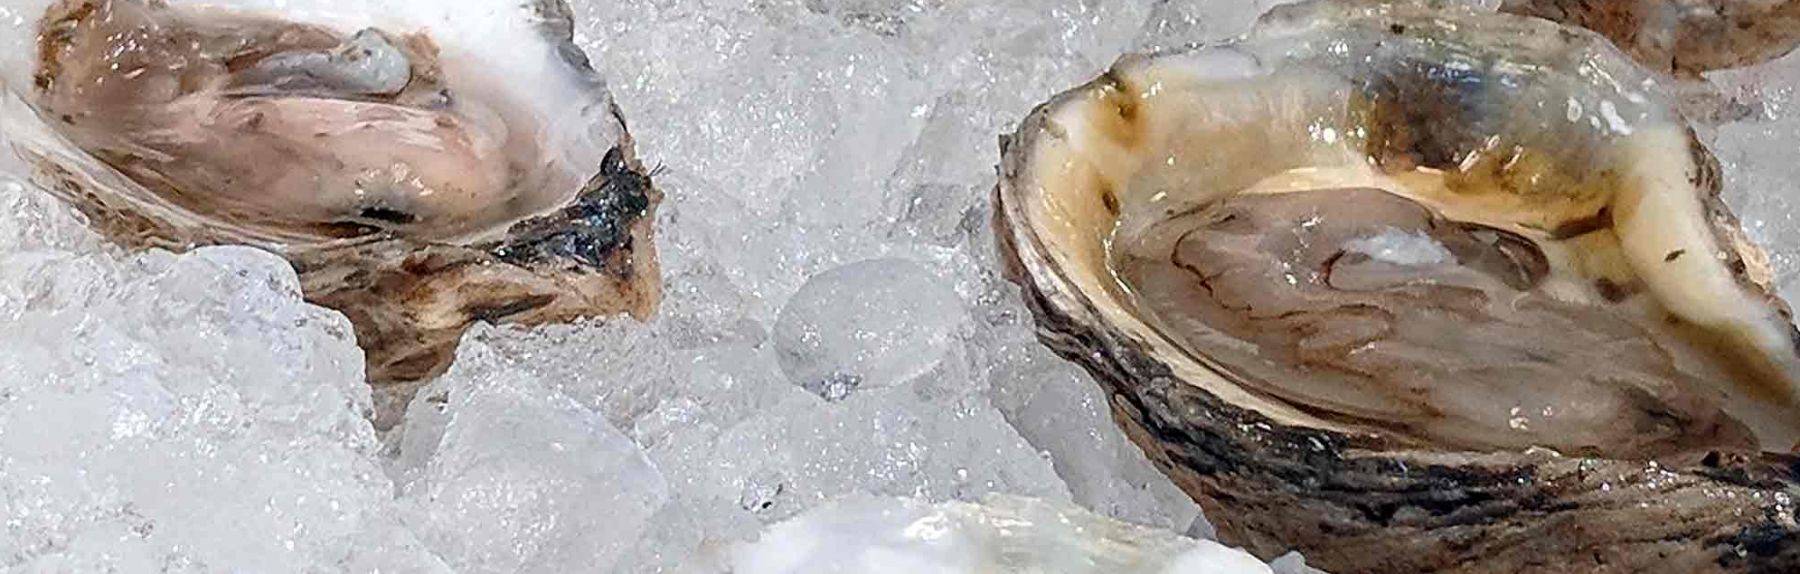 Portland Maine Oysters